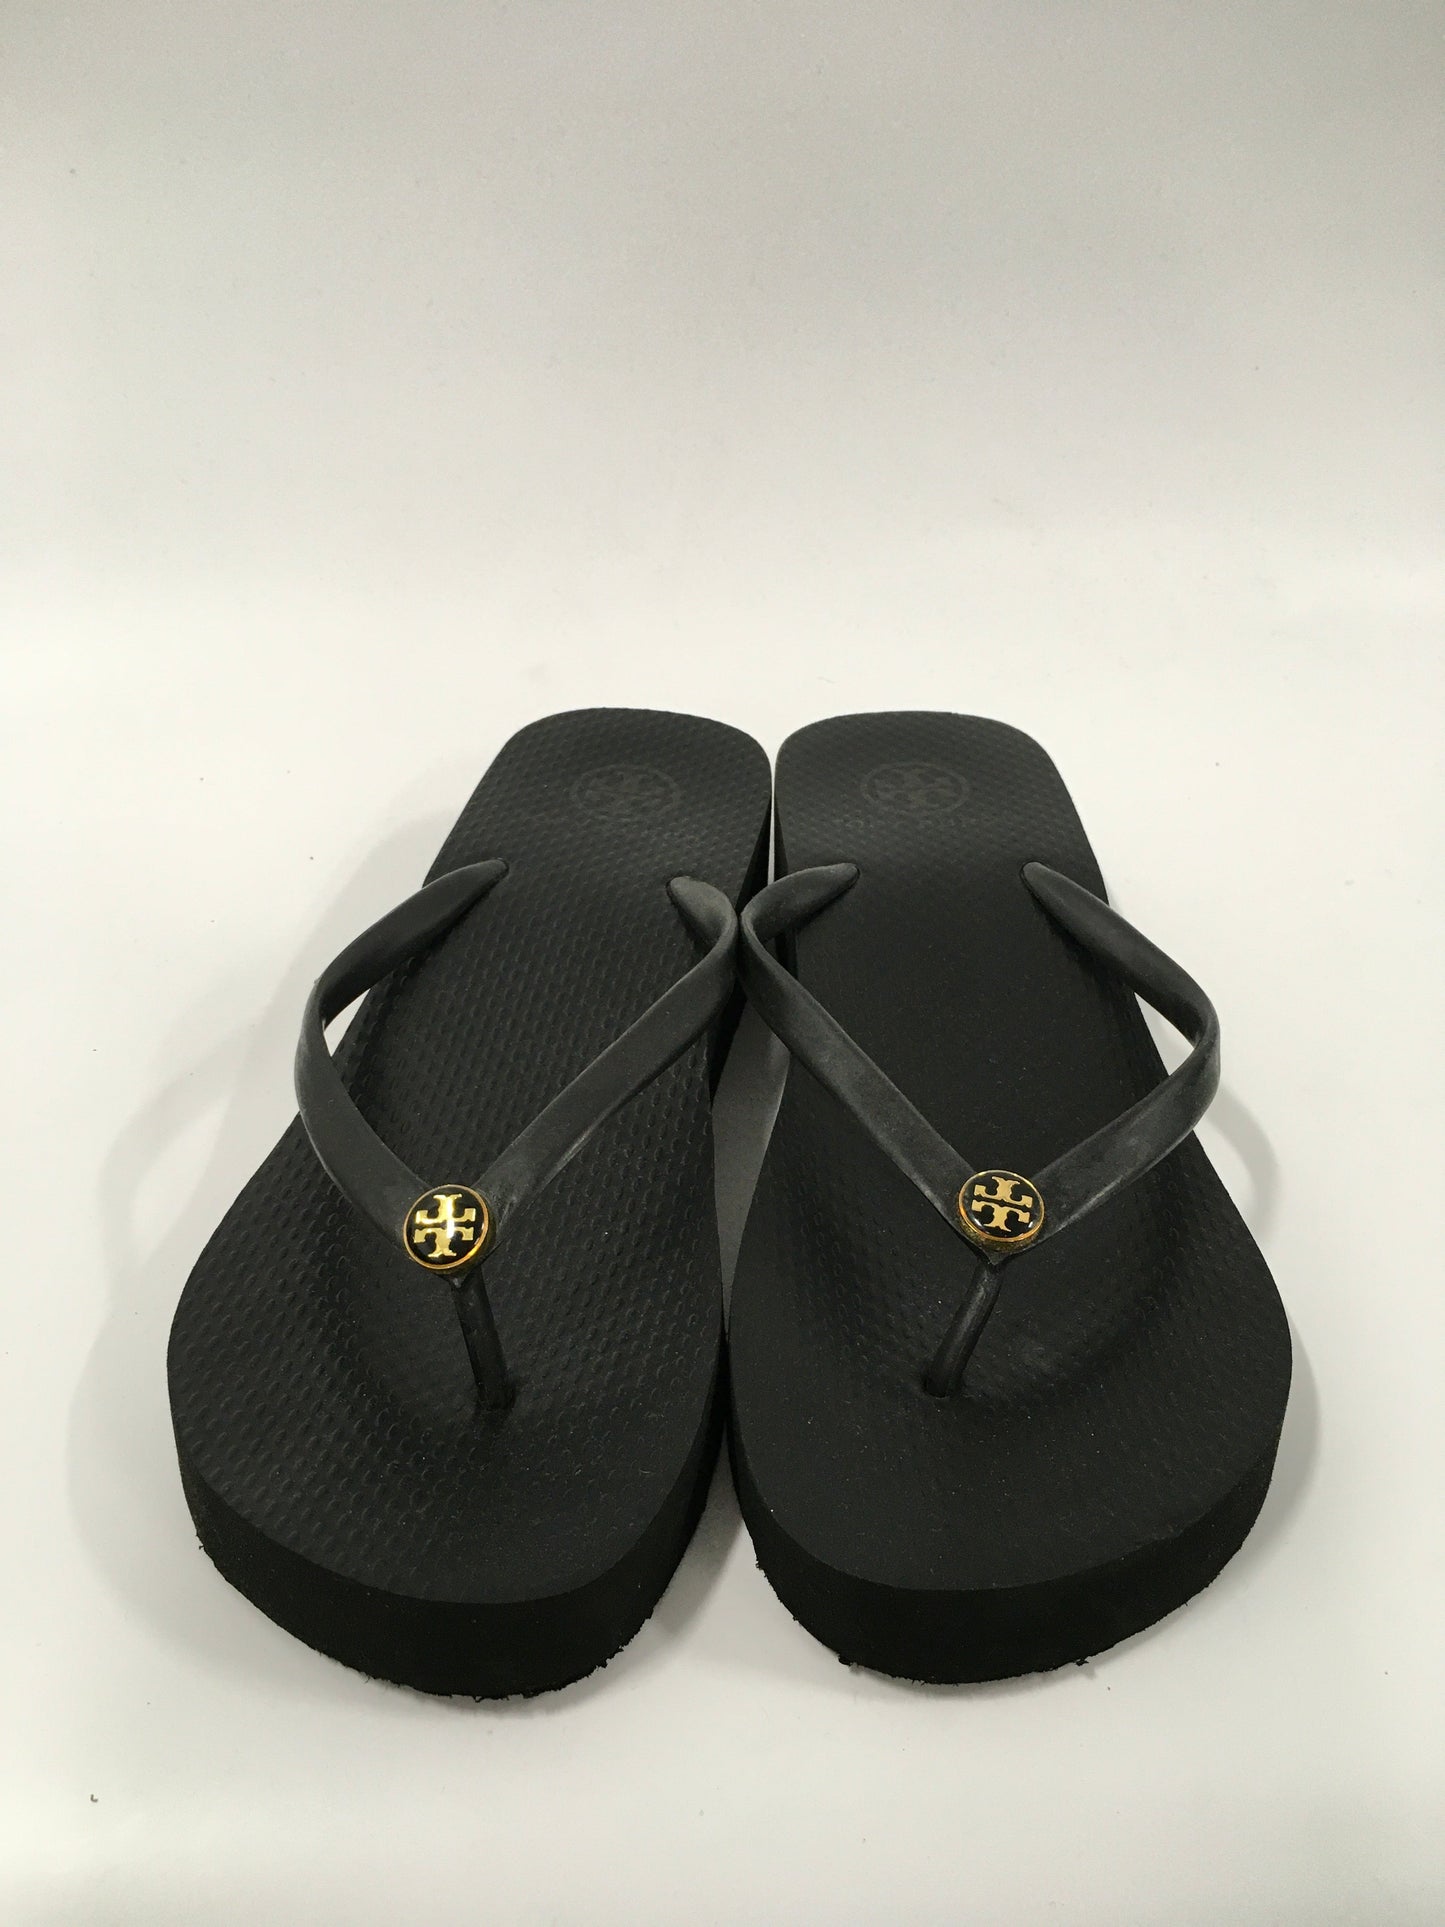 Black Sandals Flip Flops Tory Burch, Size 7.5